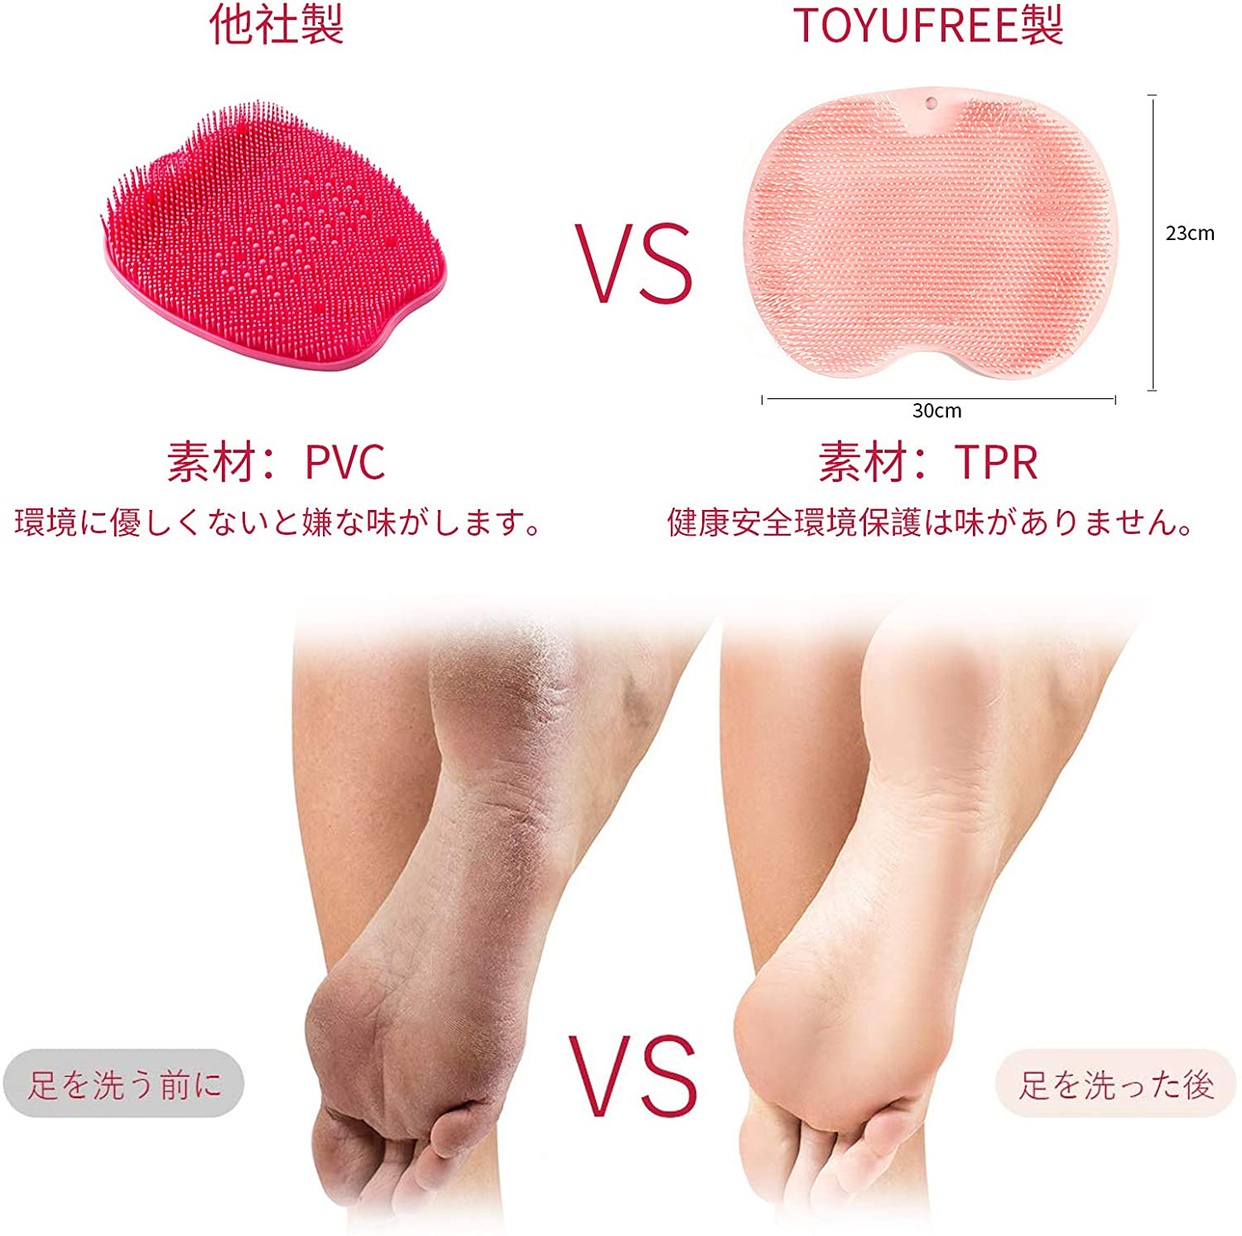 TOYU FREE(トーユーフリー) 足洗いマットの商品画像3 